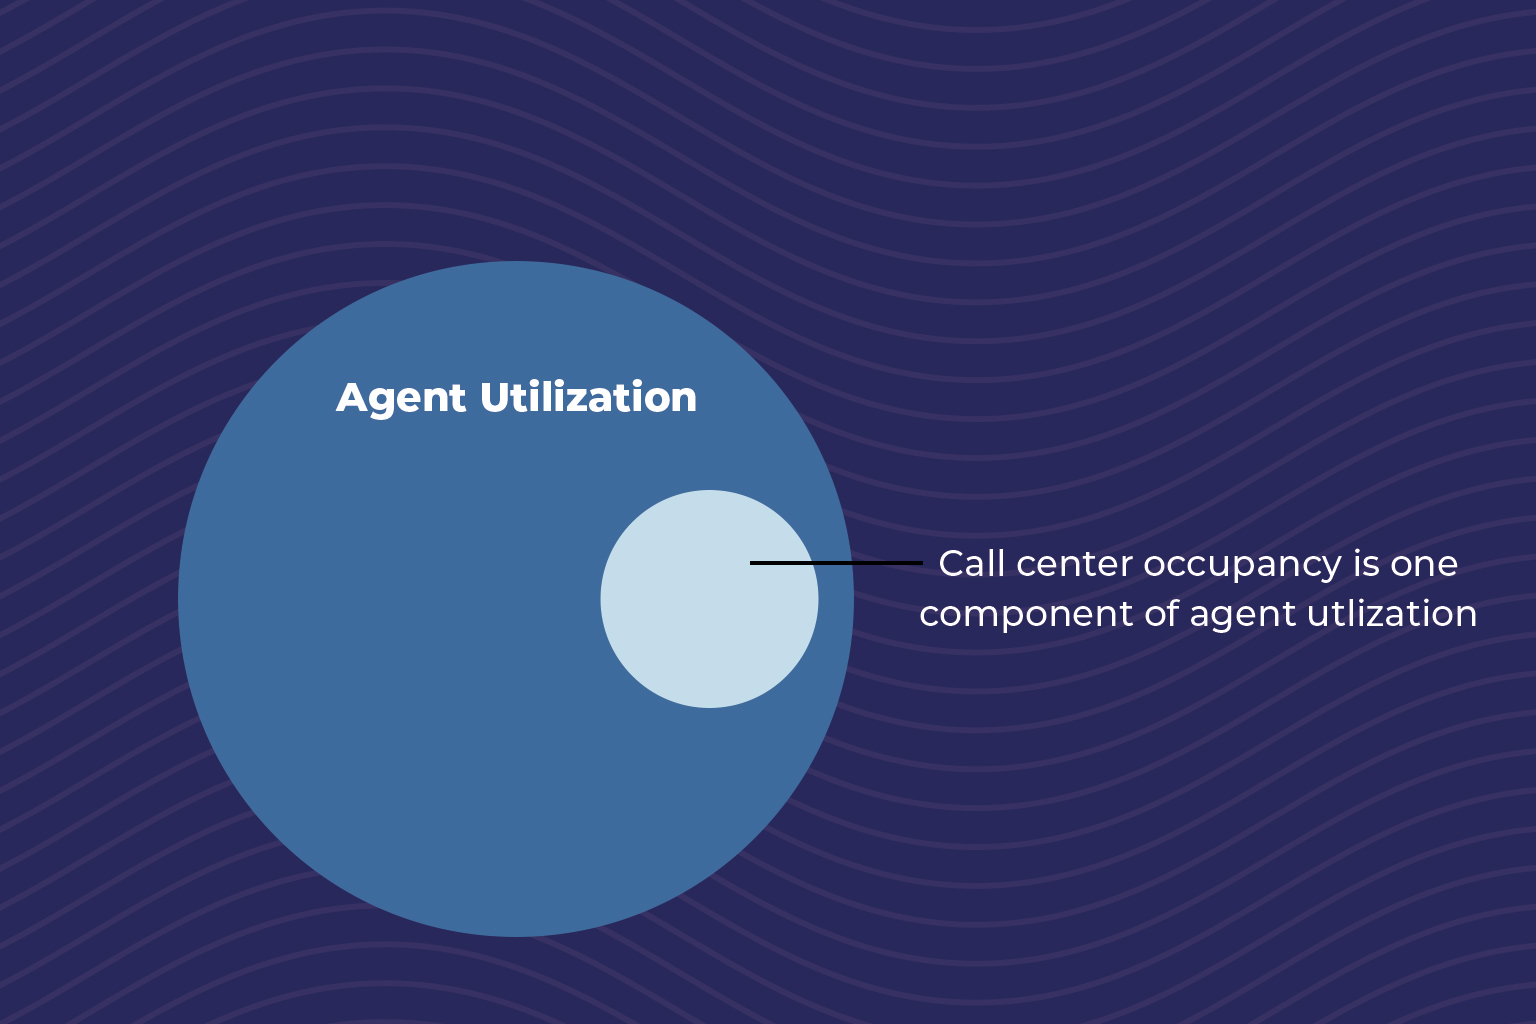 Agent Utilization versus Call Center Occupancy Rate